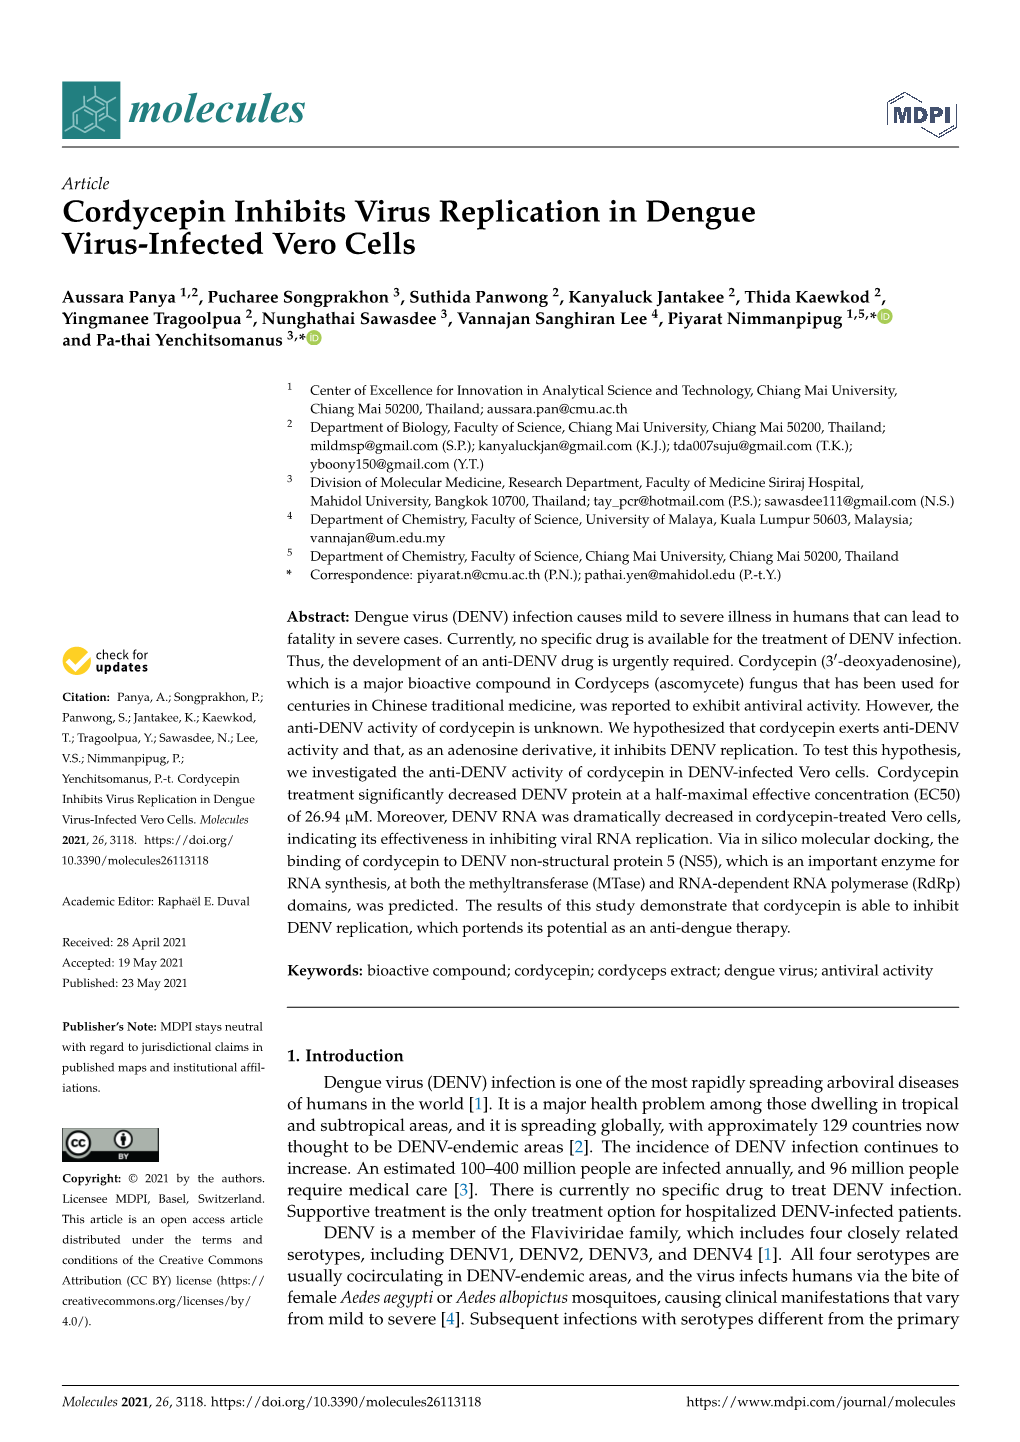 Cordycepin Inhibits Virus Replication in Dengue Virus-Infected Vero Cells